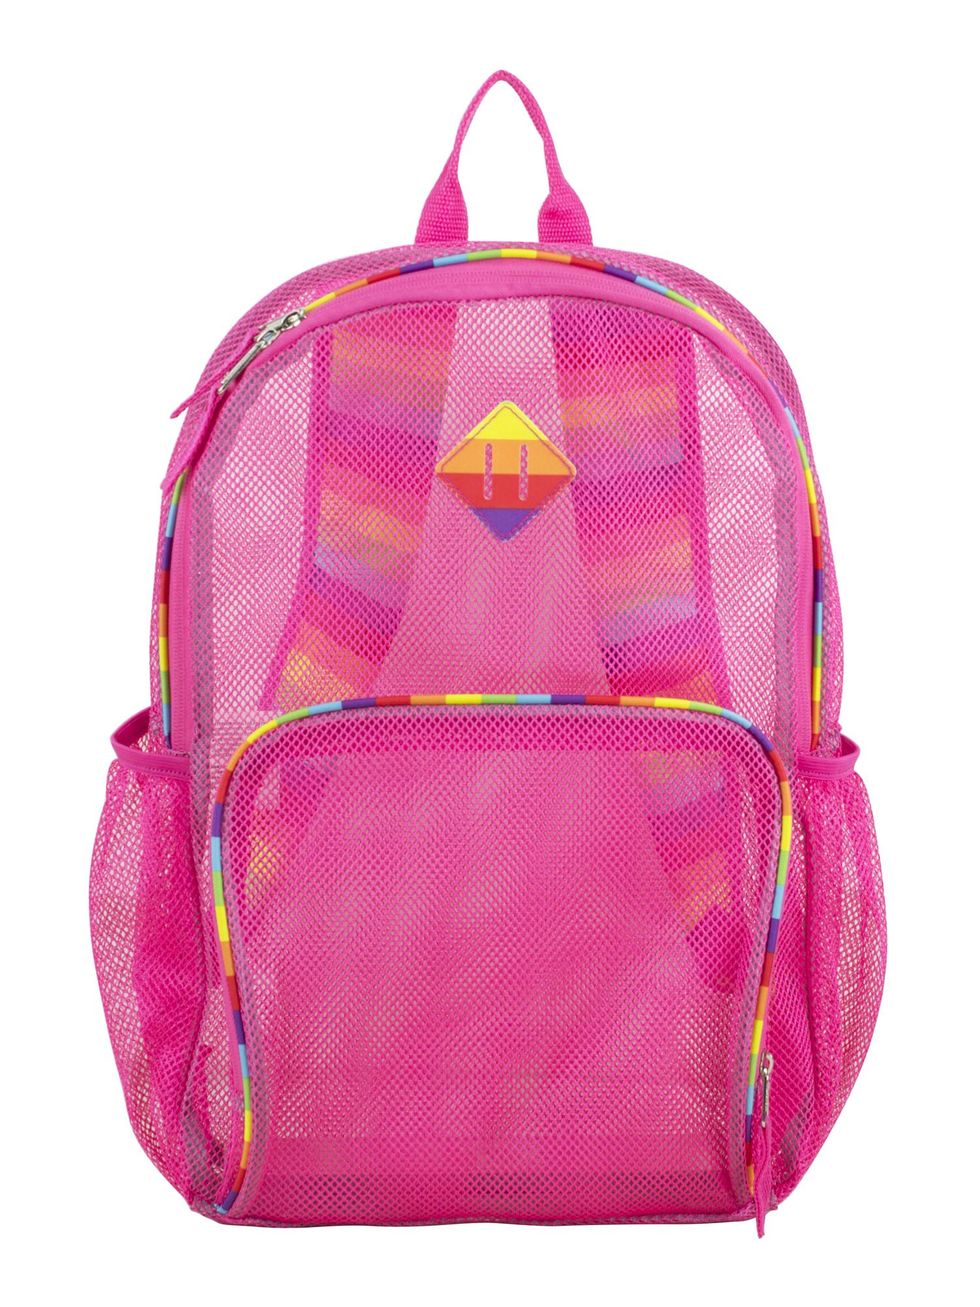 Eastsport Multi-Purpose Mesh Backpack with Front Pocket